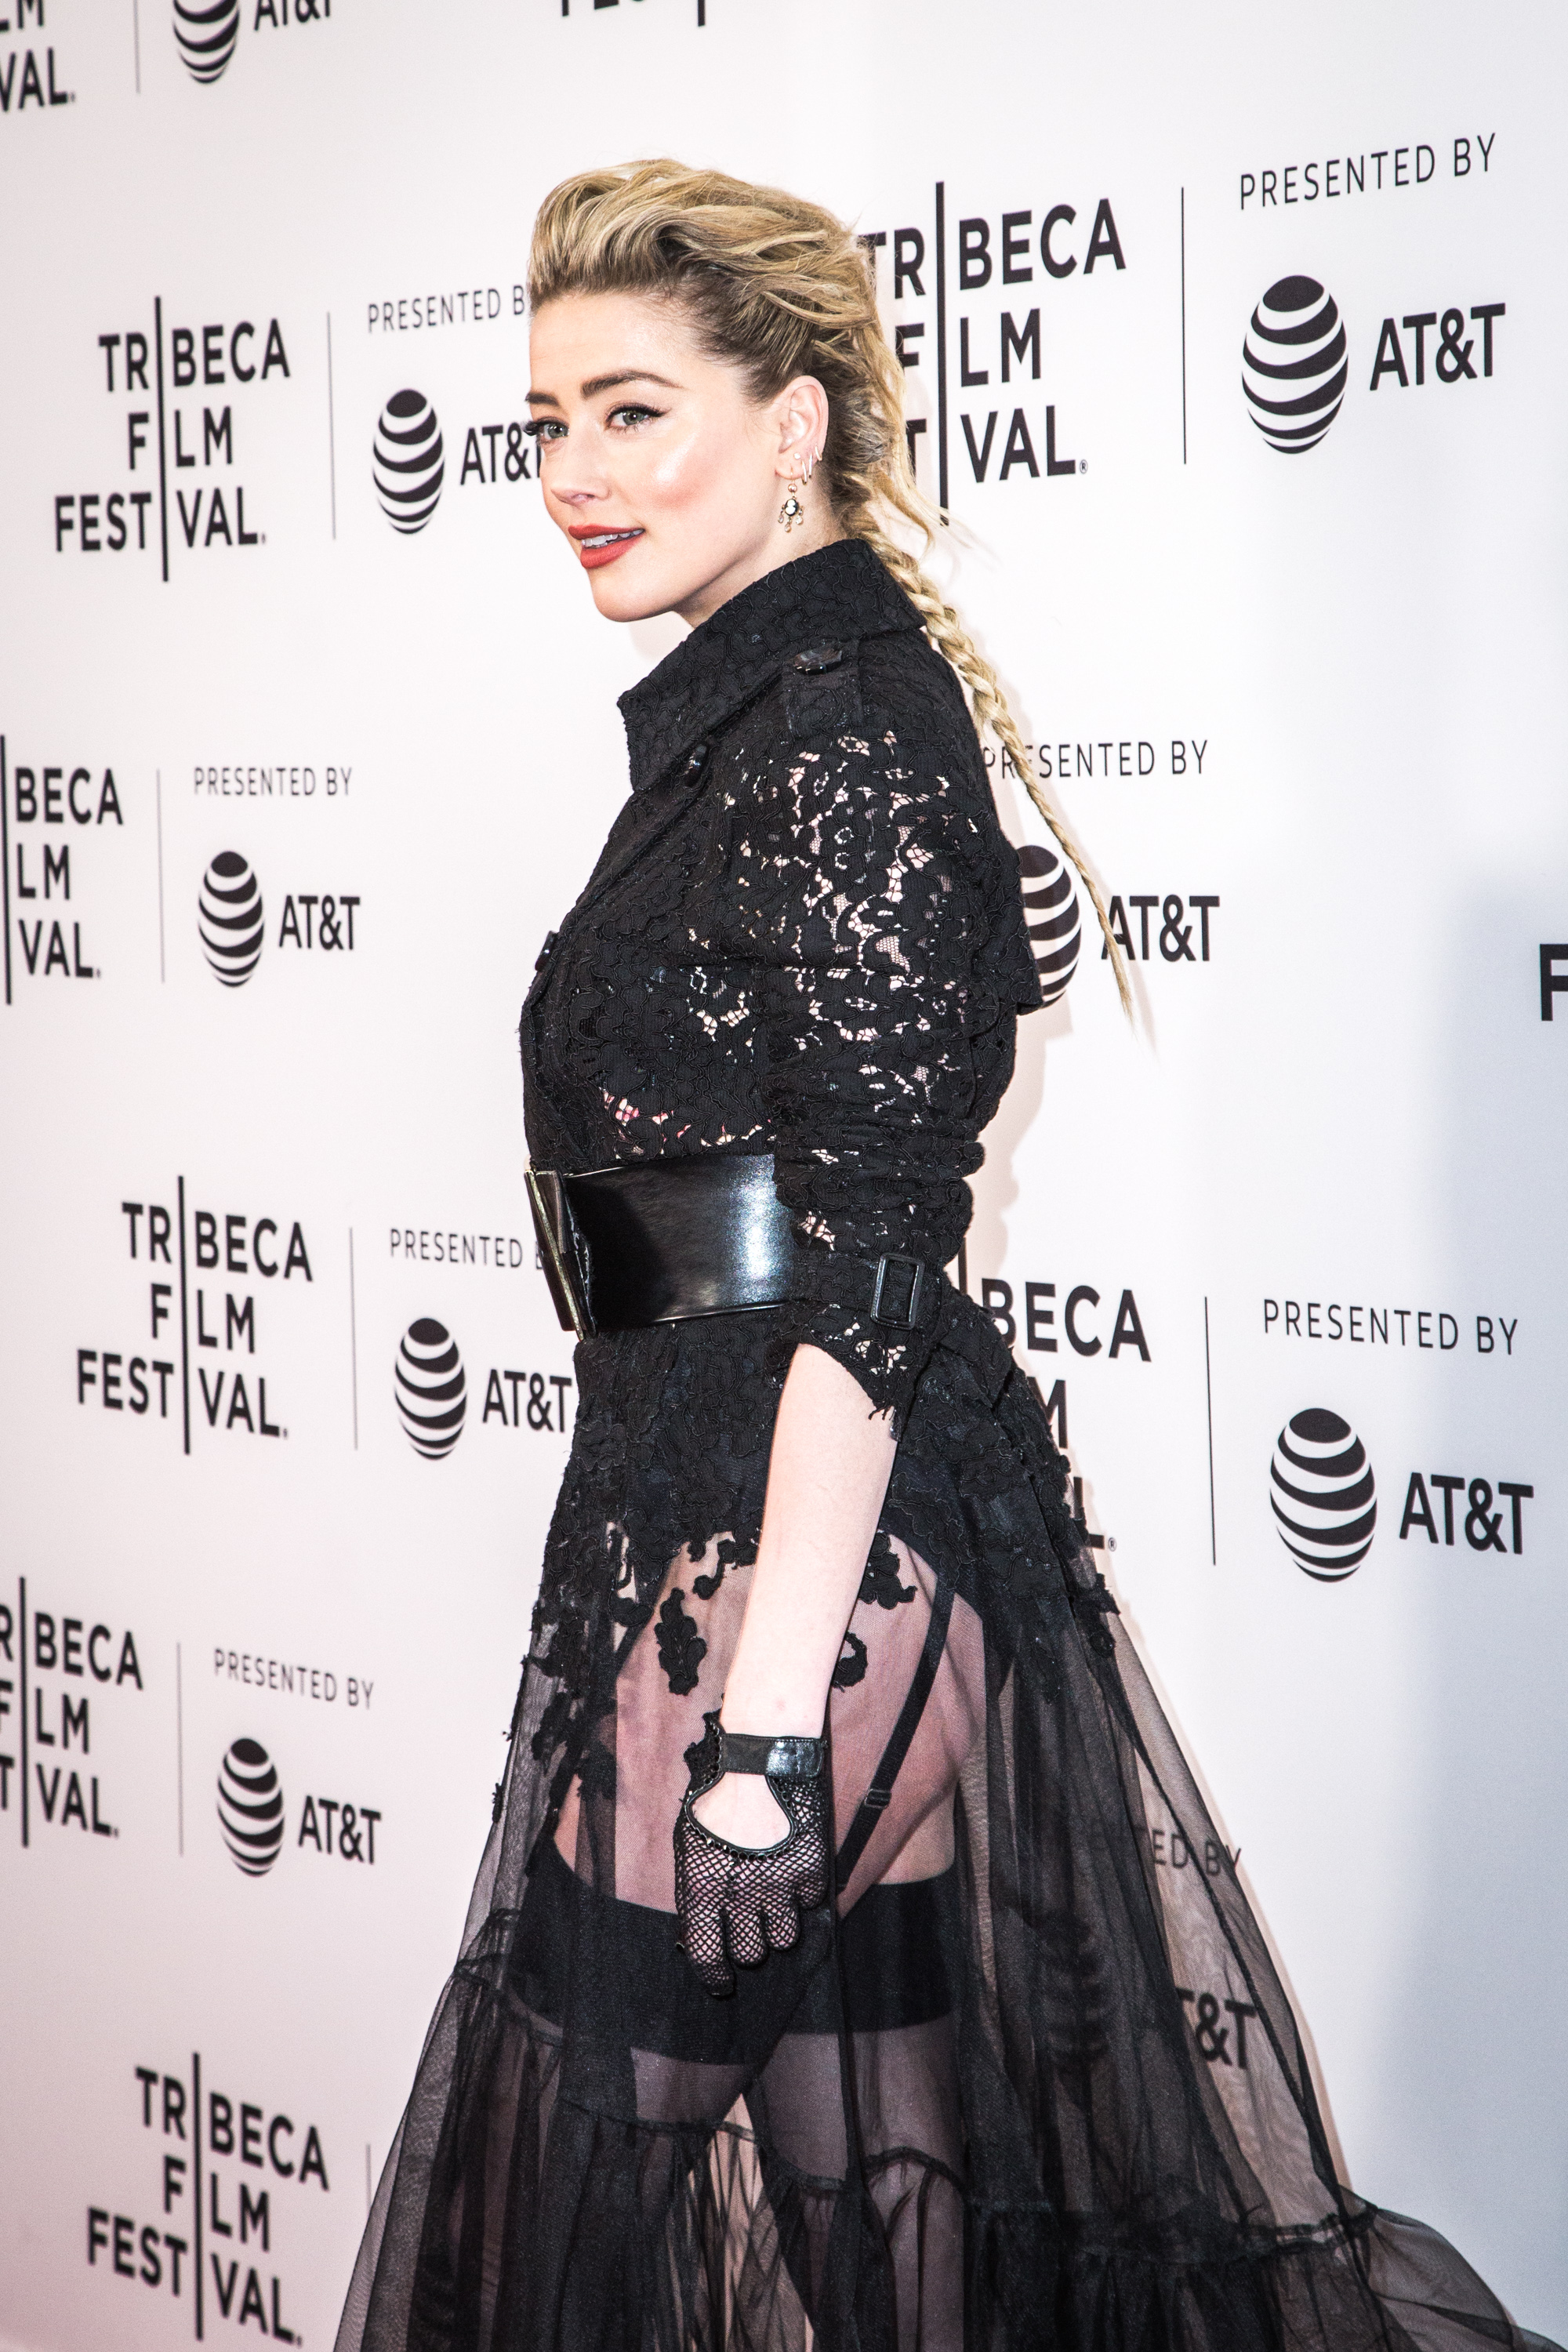 Amber Heard “gully” Screening At The 2019 Tribeca Film Festival In